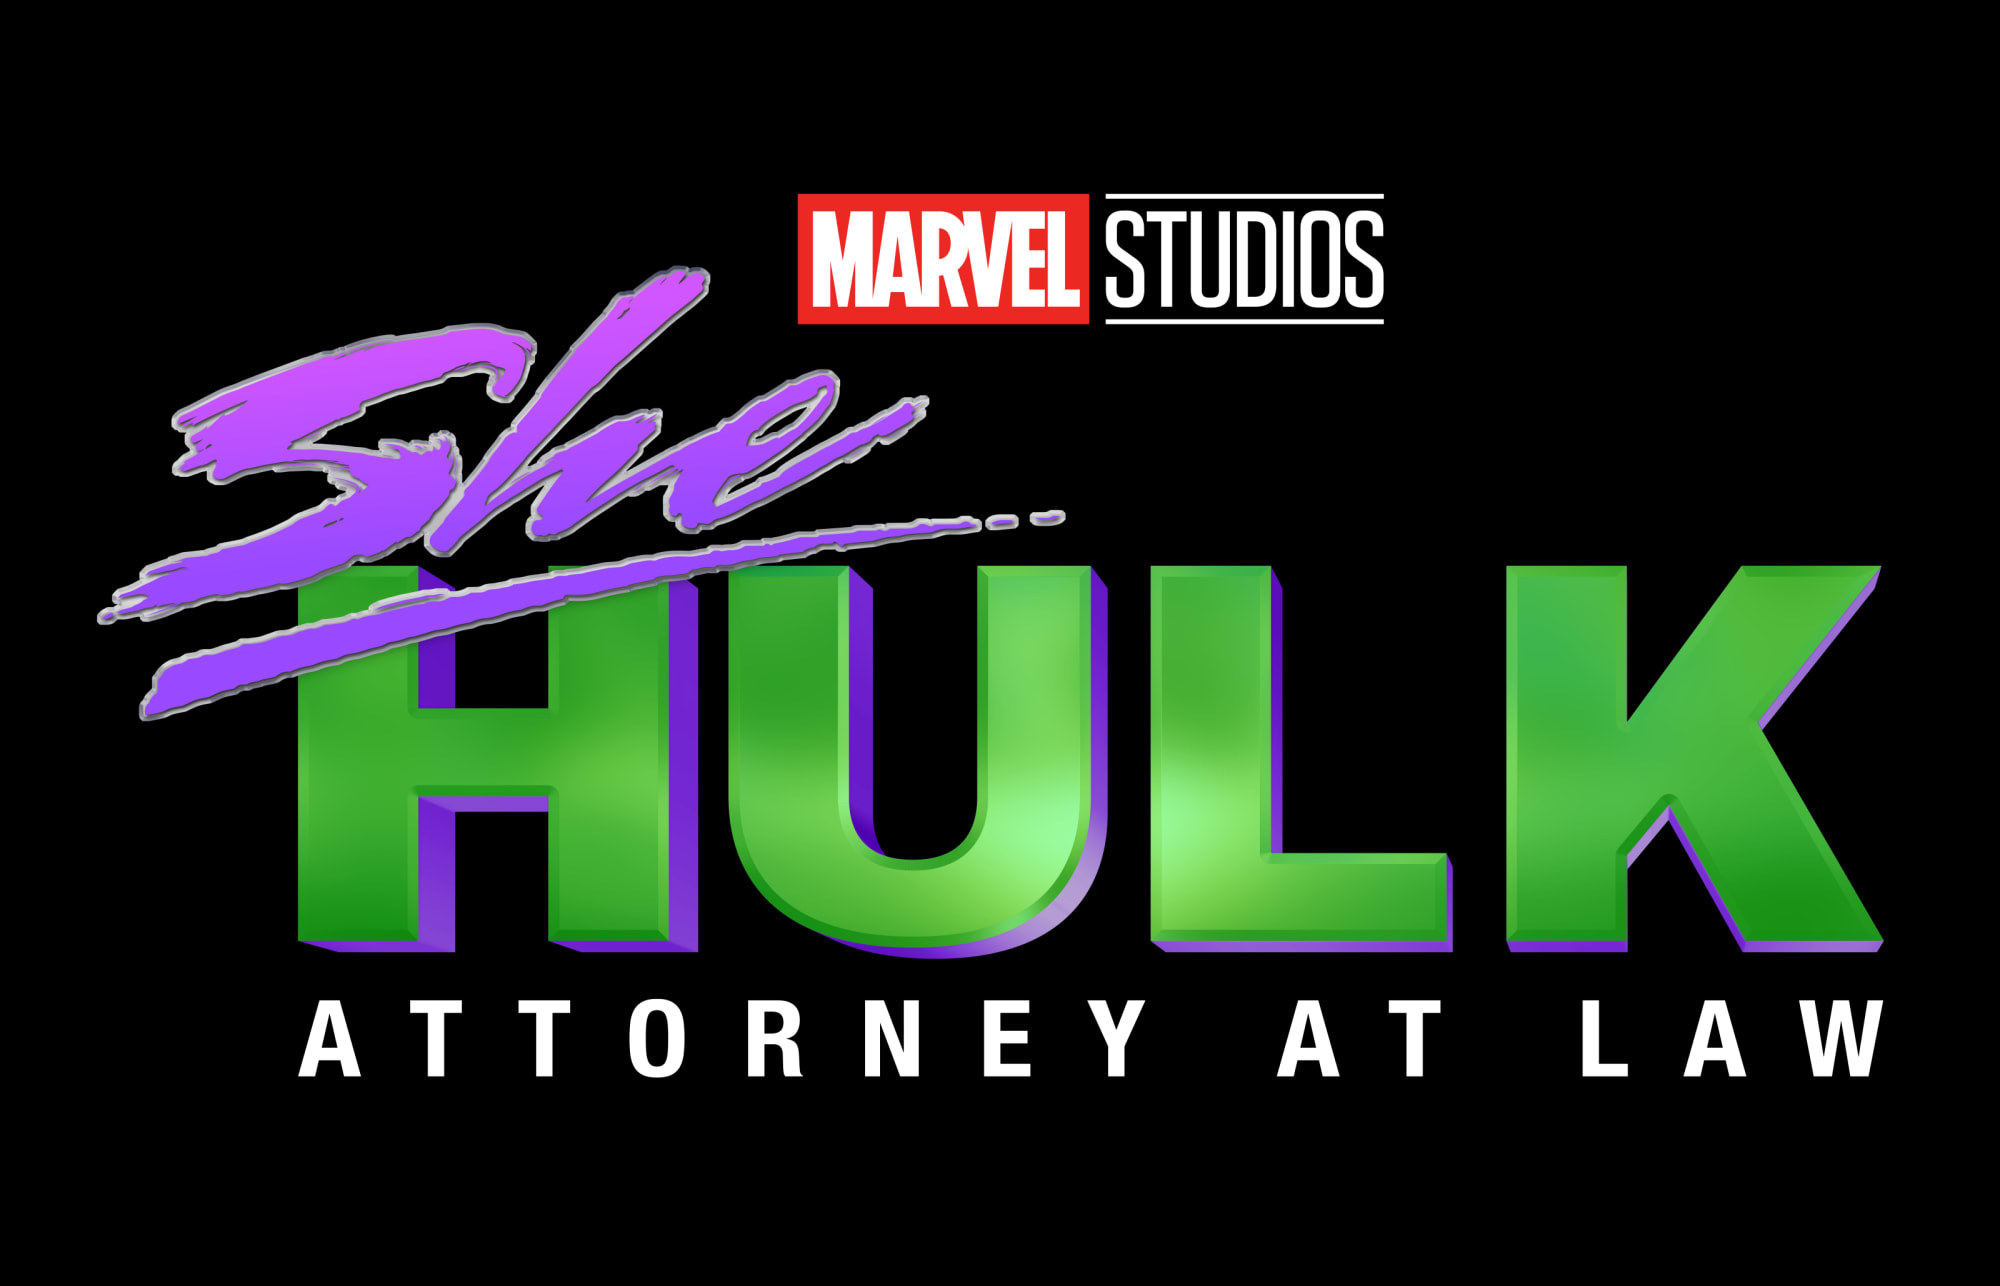 She-Hulk’s trailer teases new origins (and a possible secret villain?)